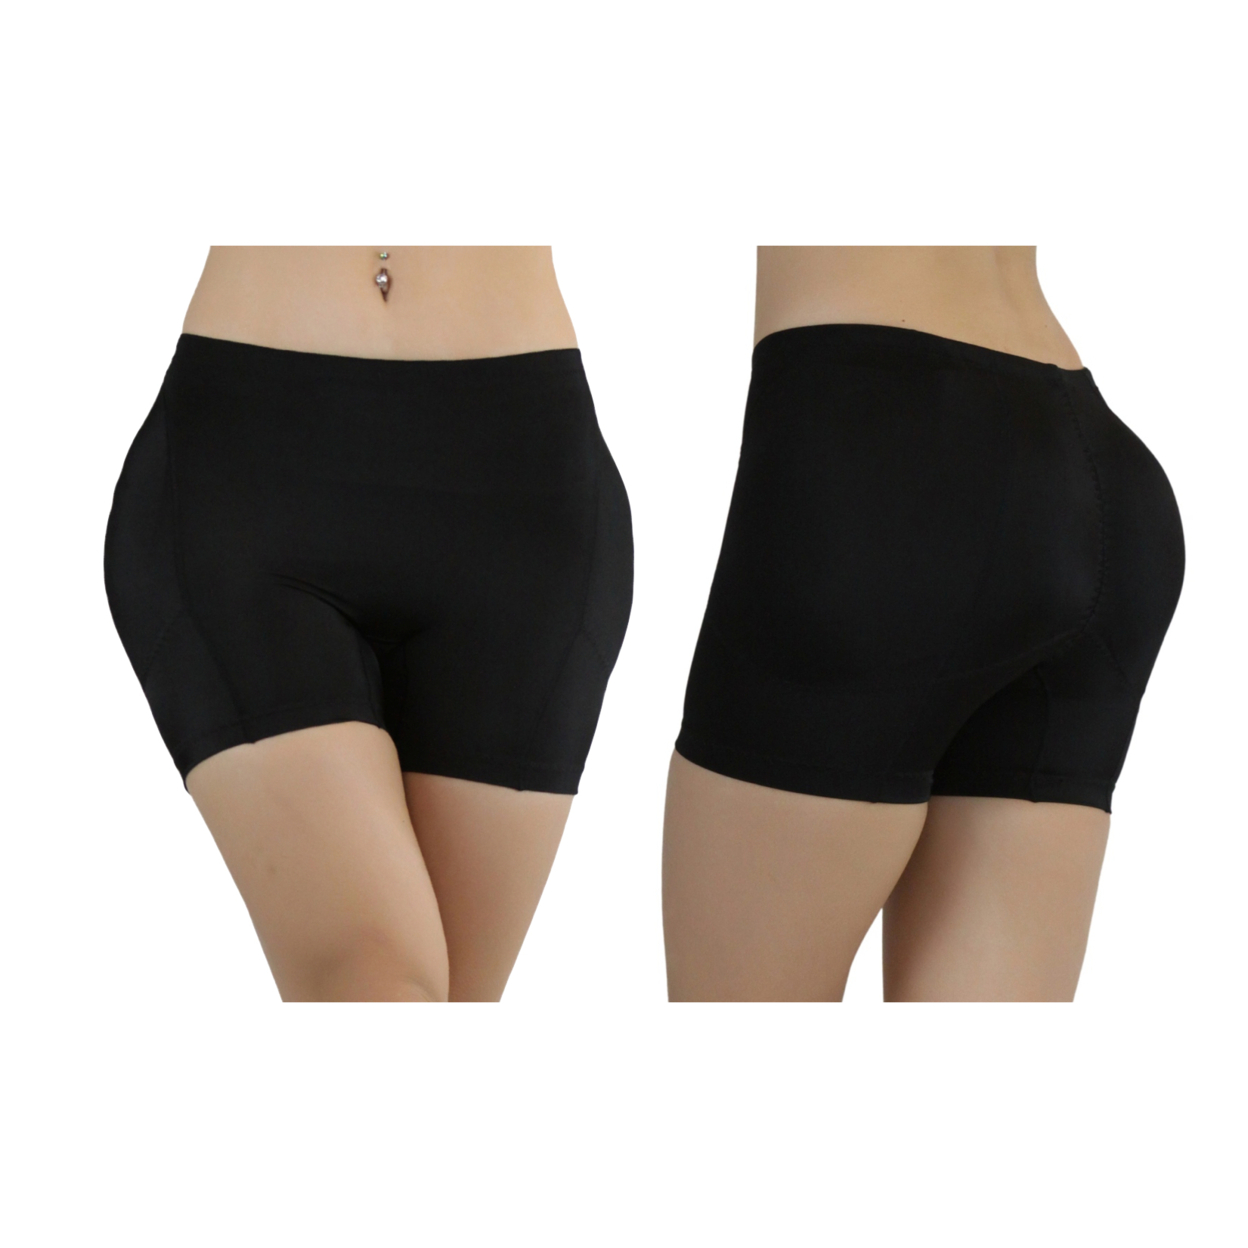 Women's Butt And Hip Padded Shaper - Black, M